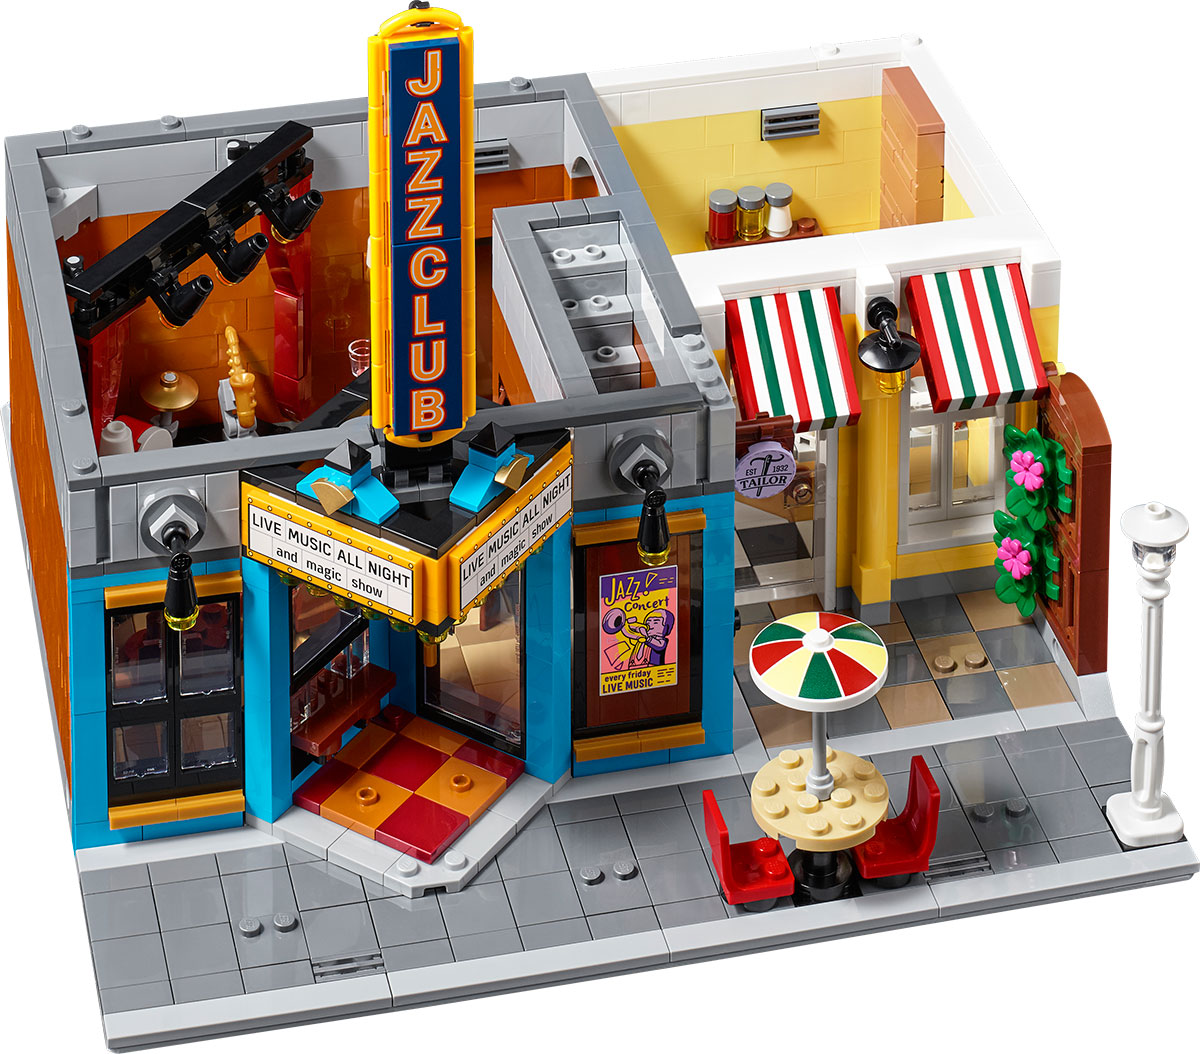 Brickfinder - LEGO Modular Jazz Club 10312 Officially Announced!